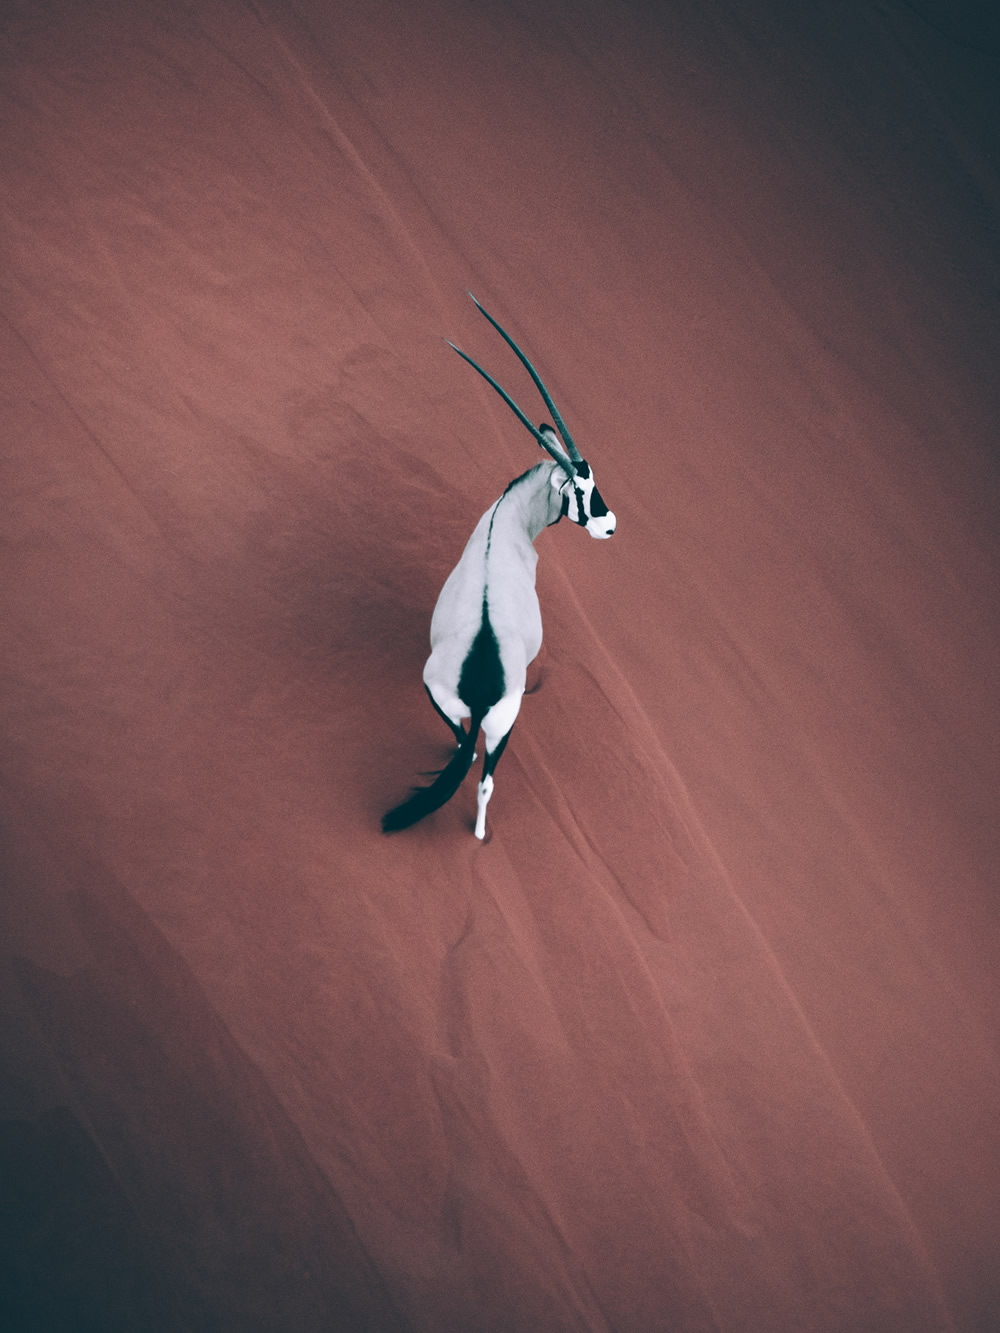 Namibia, Full Of Life: Beautiful Desert Photography By Tobias Hagg